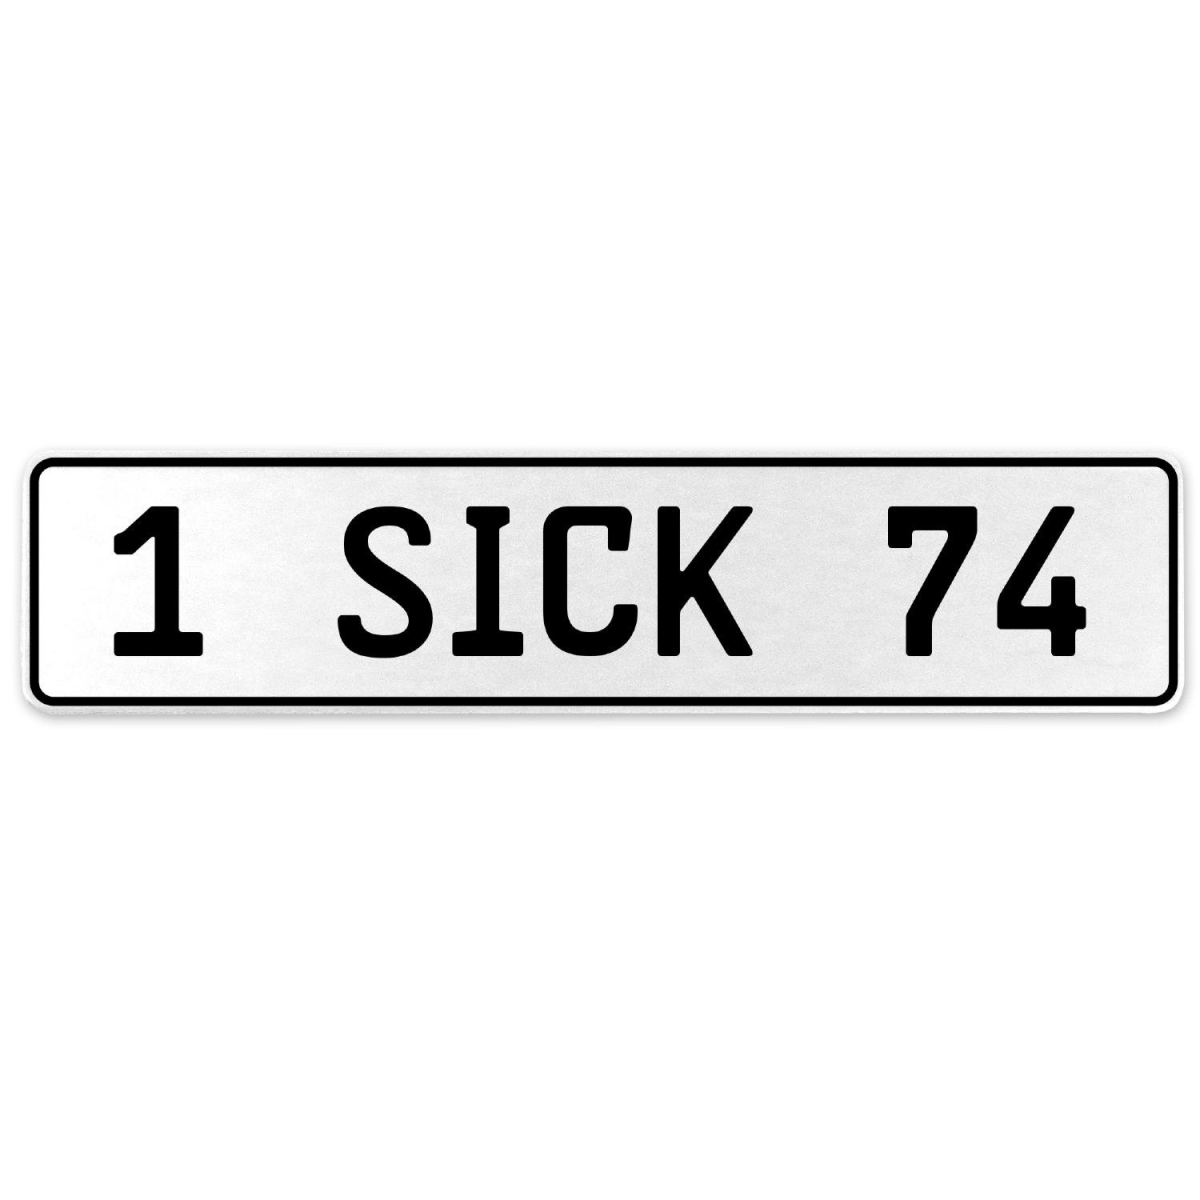 554473 1 Sick 74 - White Aluminum Street Sign Mancave Euro Plate Name Door Sign Wall